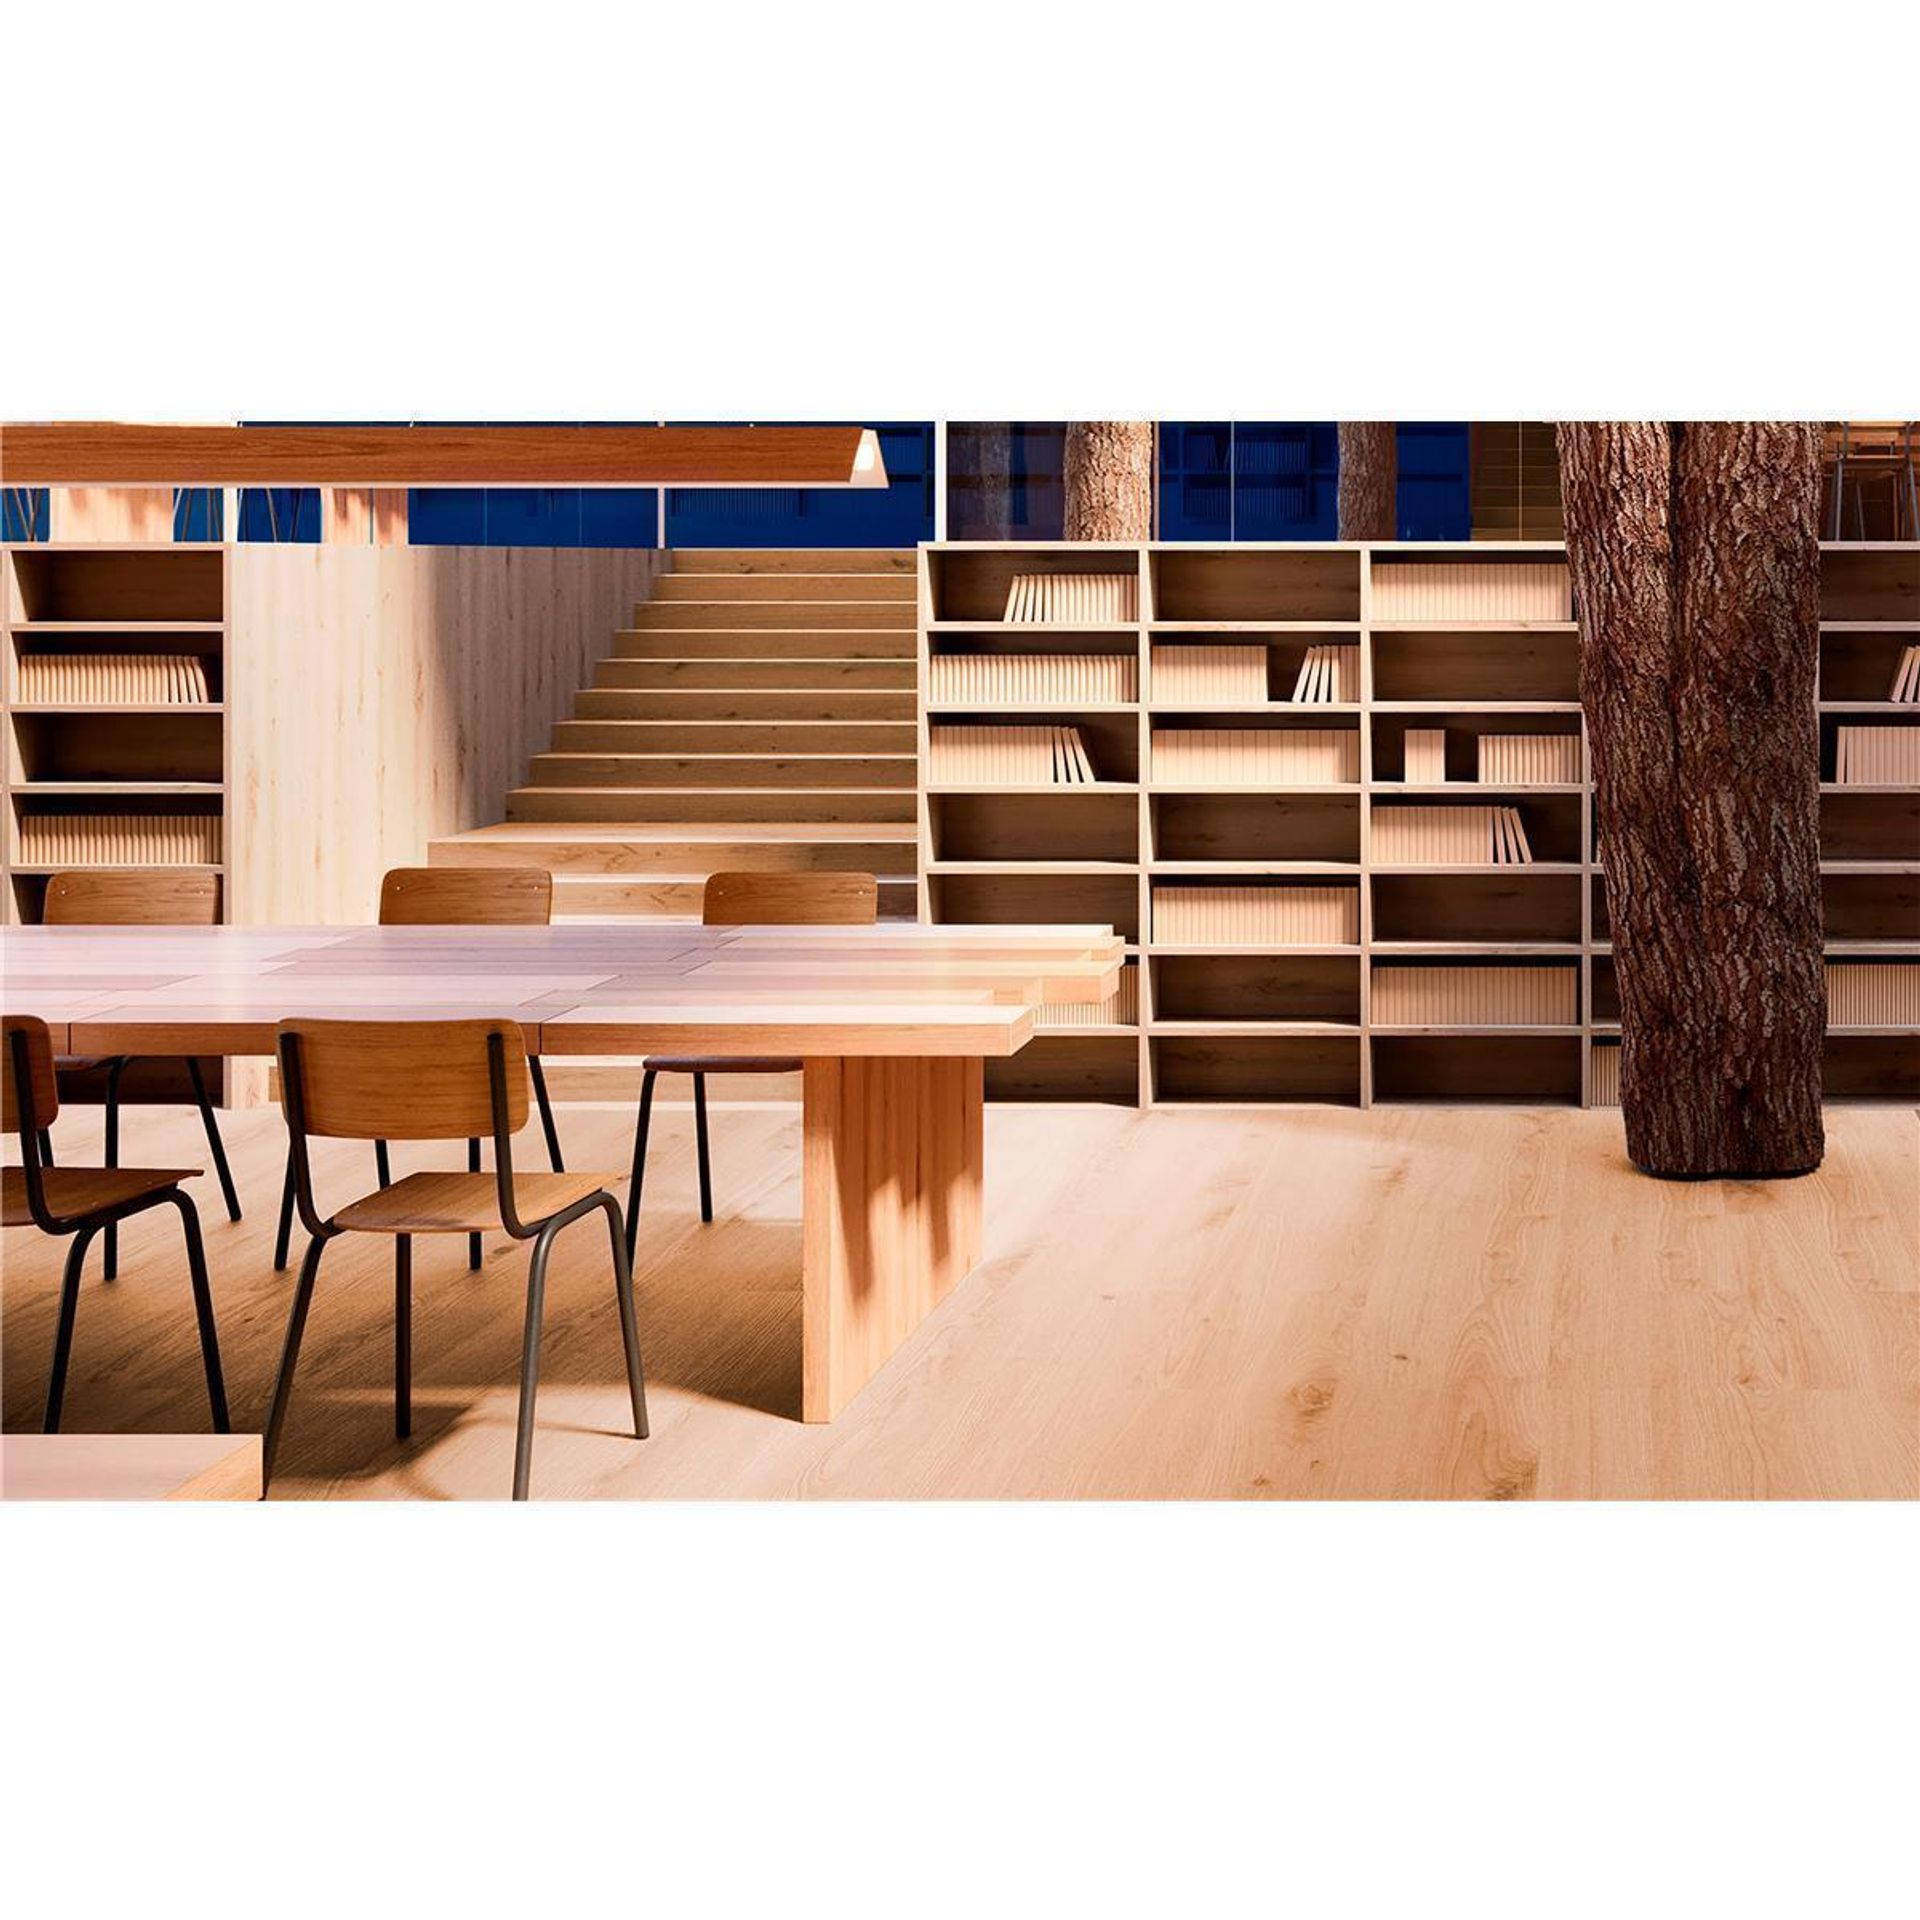 Designboden CLASSICS-Antik Oak-Natural Planke 121,1 cm x 19,05 cm - Nutzschichtdicke 0,55 mm